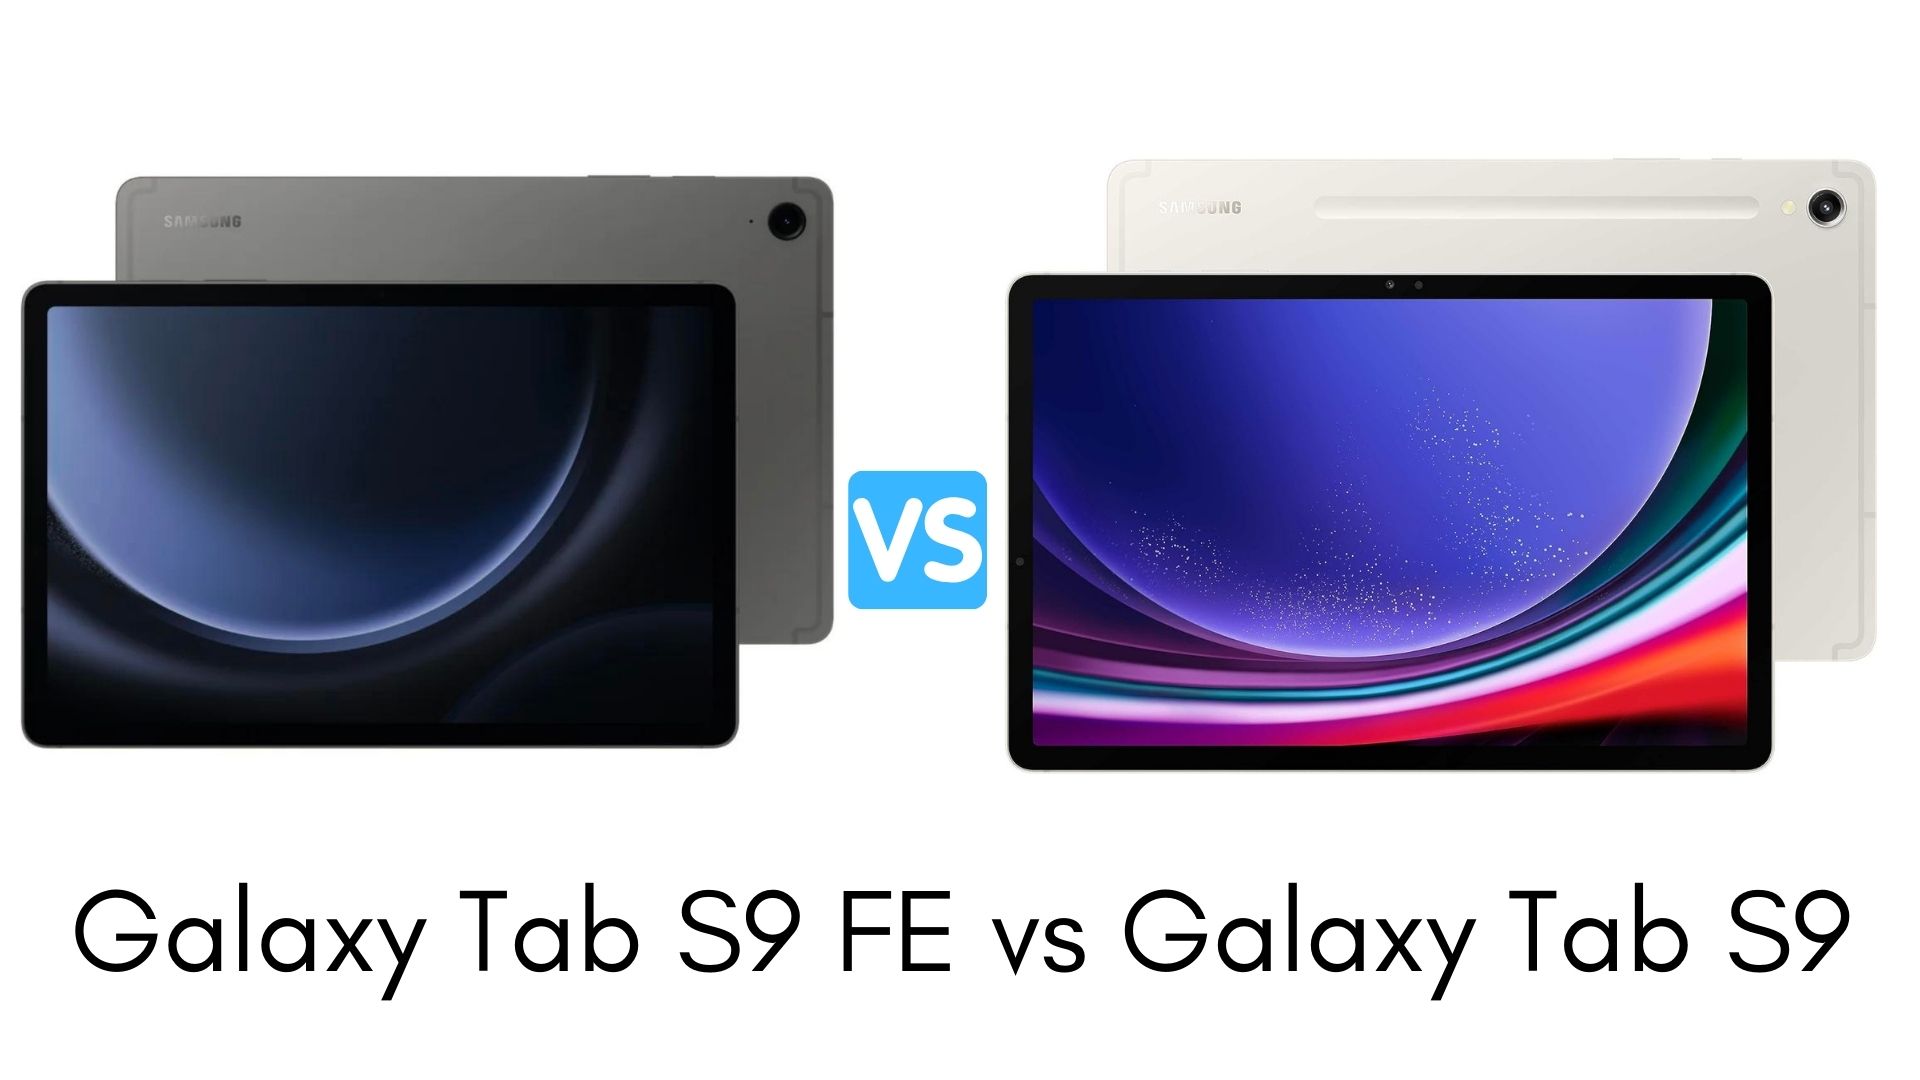 Samsung Galaxy Tab S9 FE 5G - Specs, Pricing & Reviews